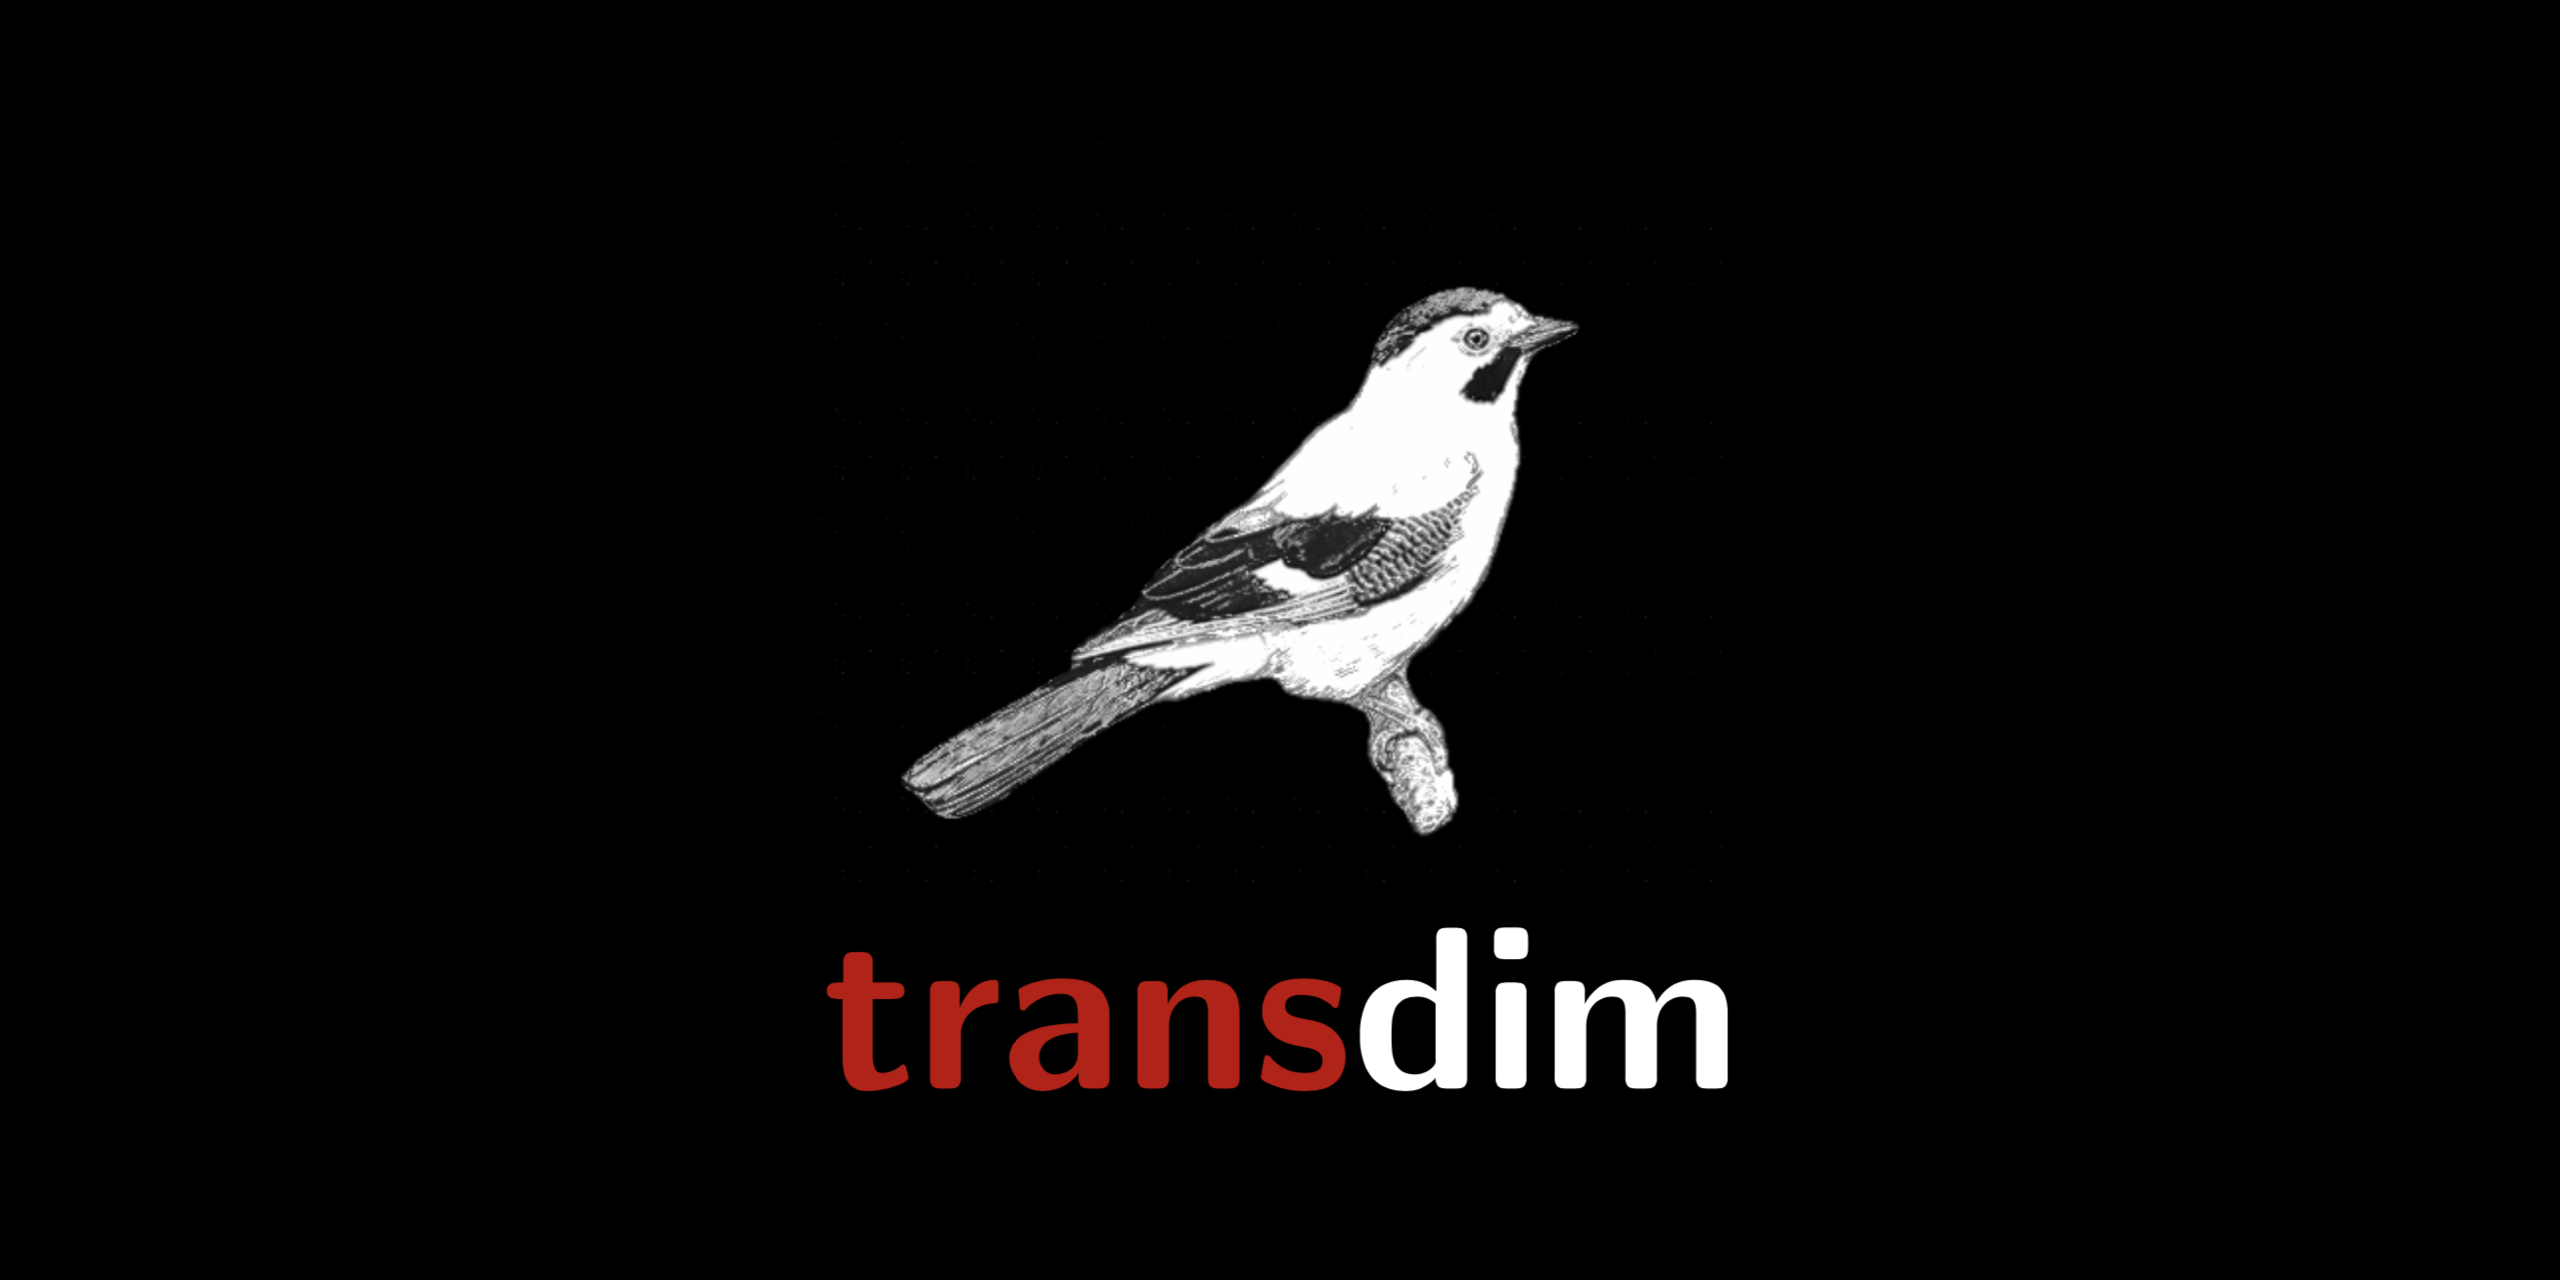 transdim_logo_large.png